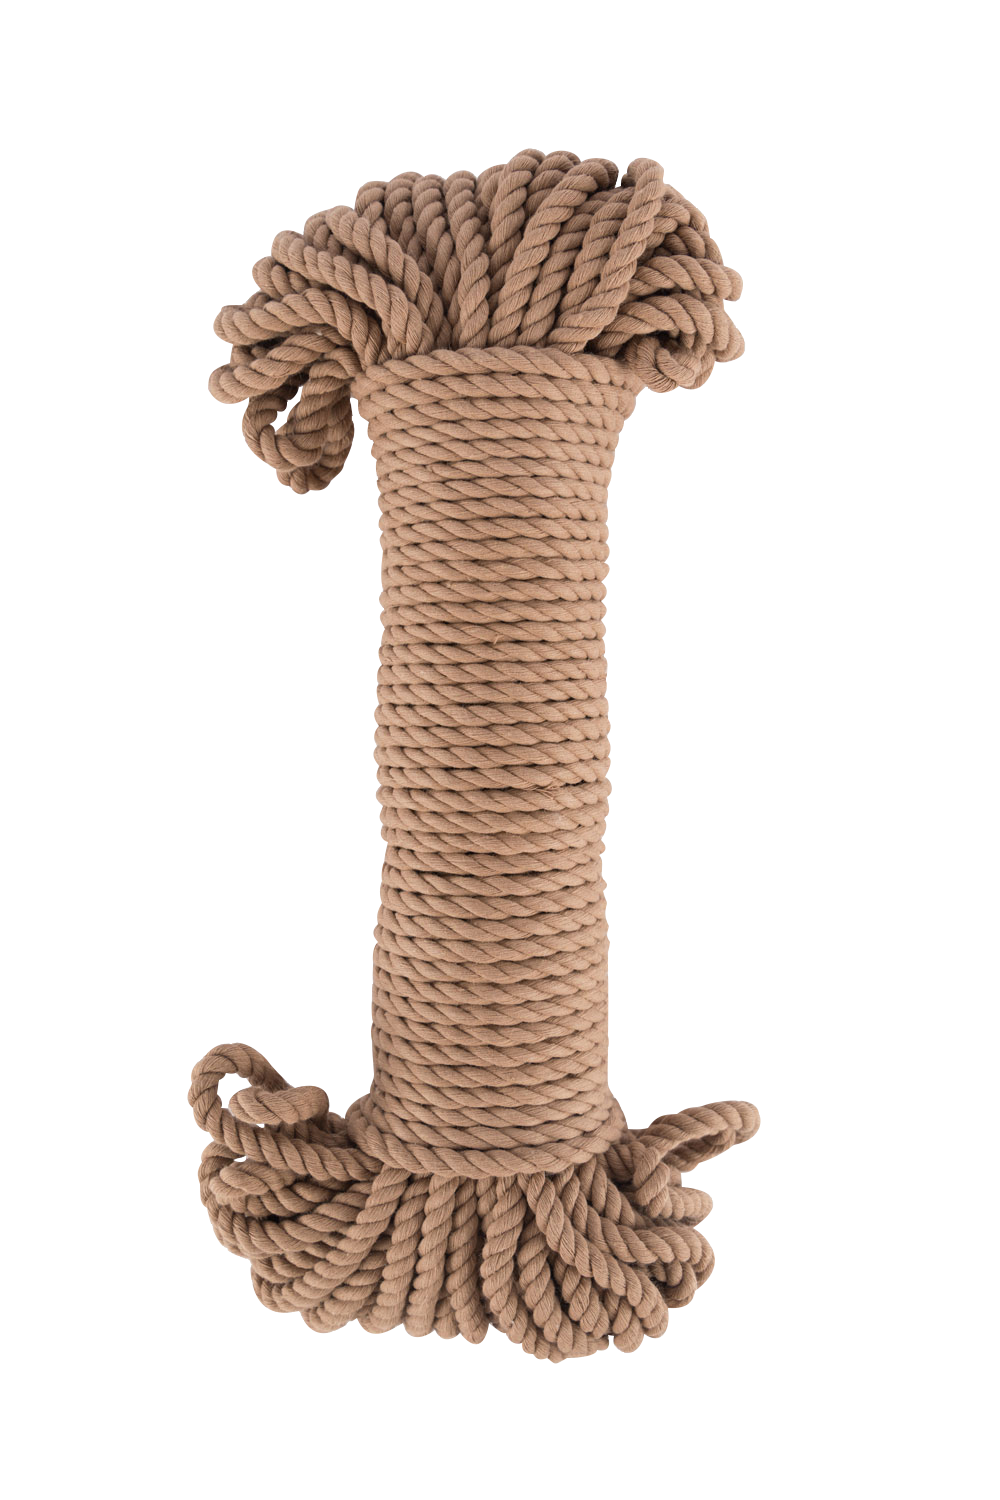 5mm Cotton Rope Bundles-DIY Macrame and Crafts Wheat by Modern Macramé